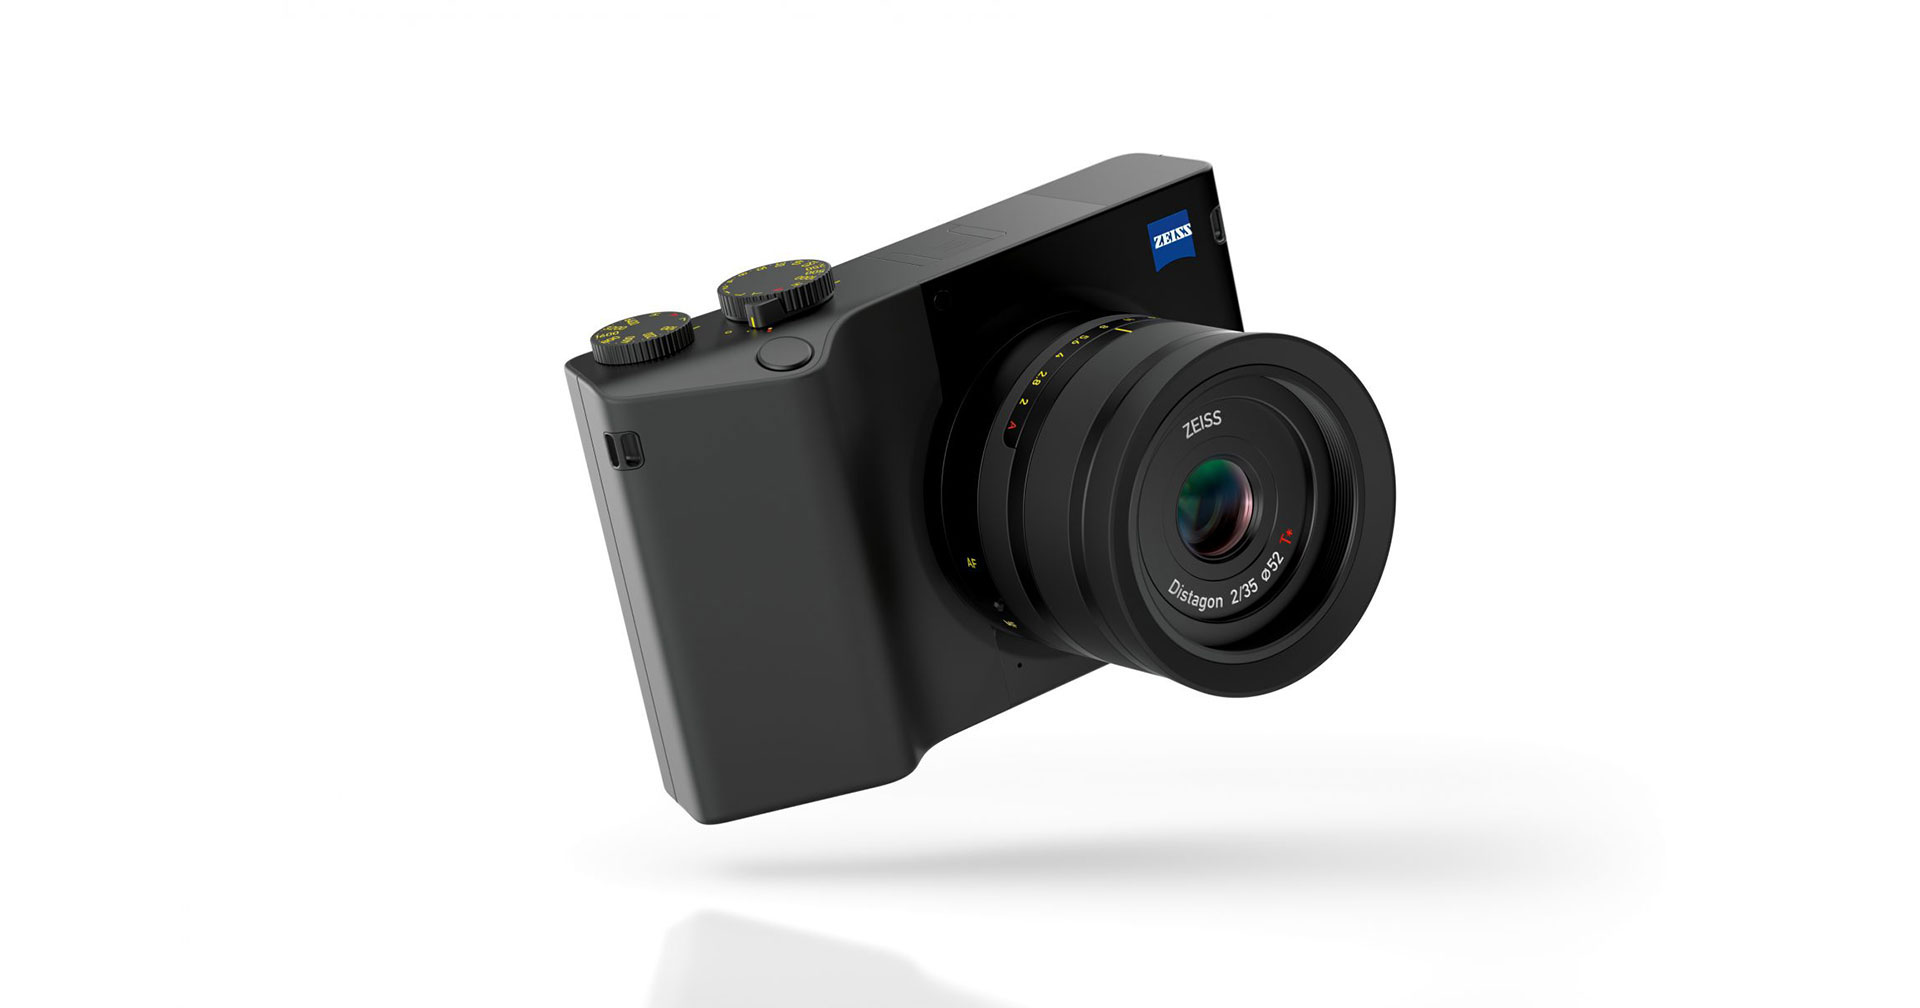 ZEISS ZX1 ออกอัปเดตเฟิร์มแวร์ใหม่ V.1.4 เพิ่มระบบ face-detection AF และอัปเดต Lightroom ในตัวกล้อง